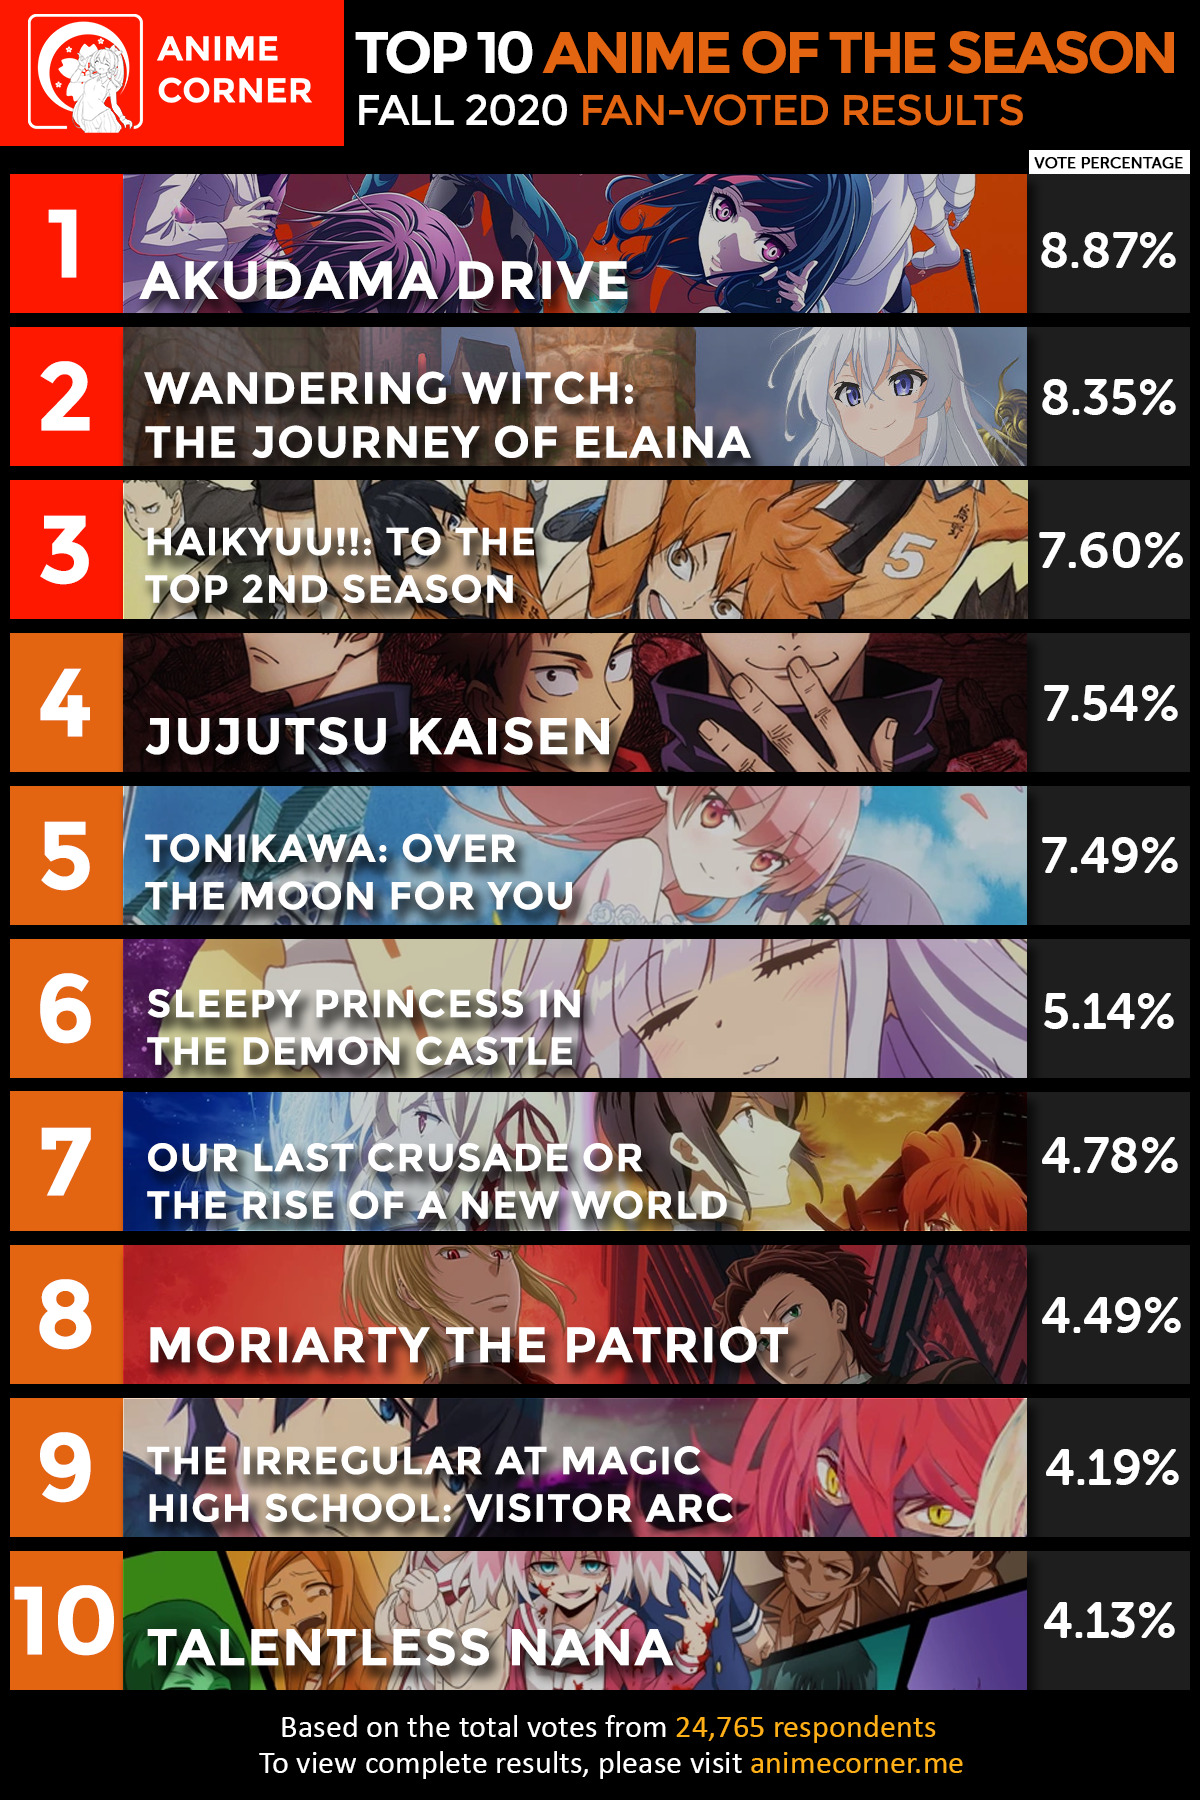 Top 10 Fall 2020 Anime of the Season